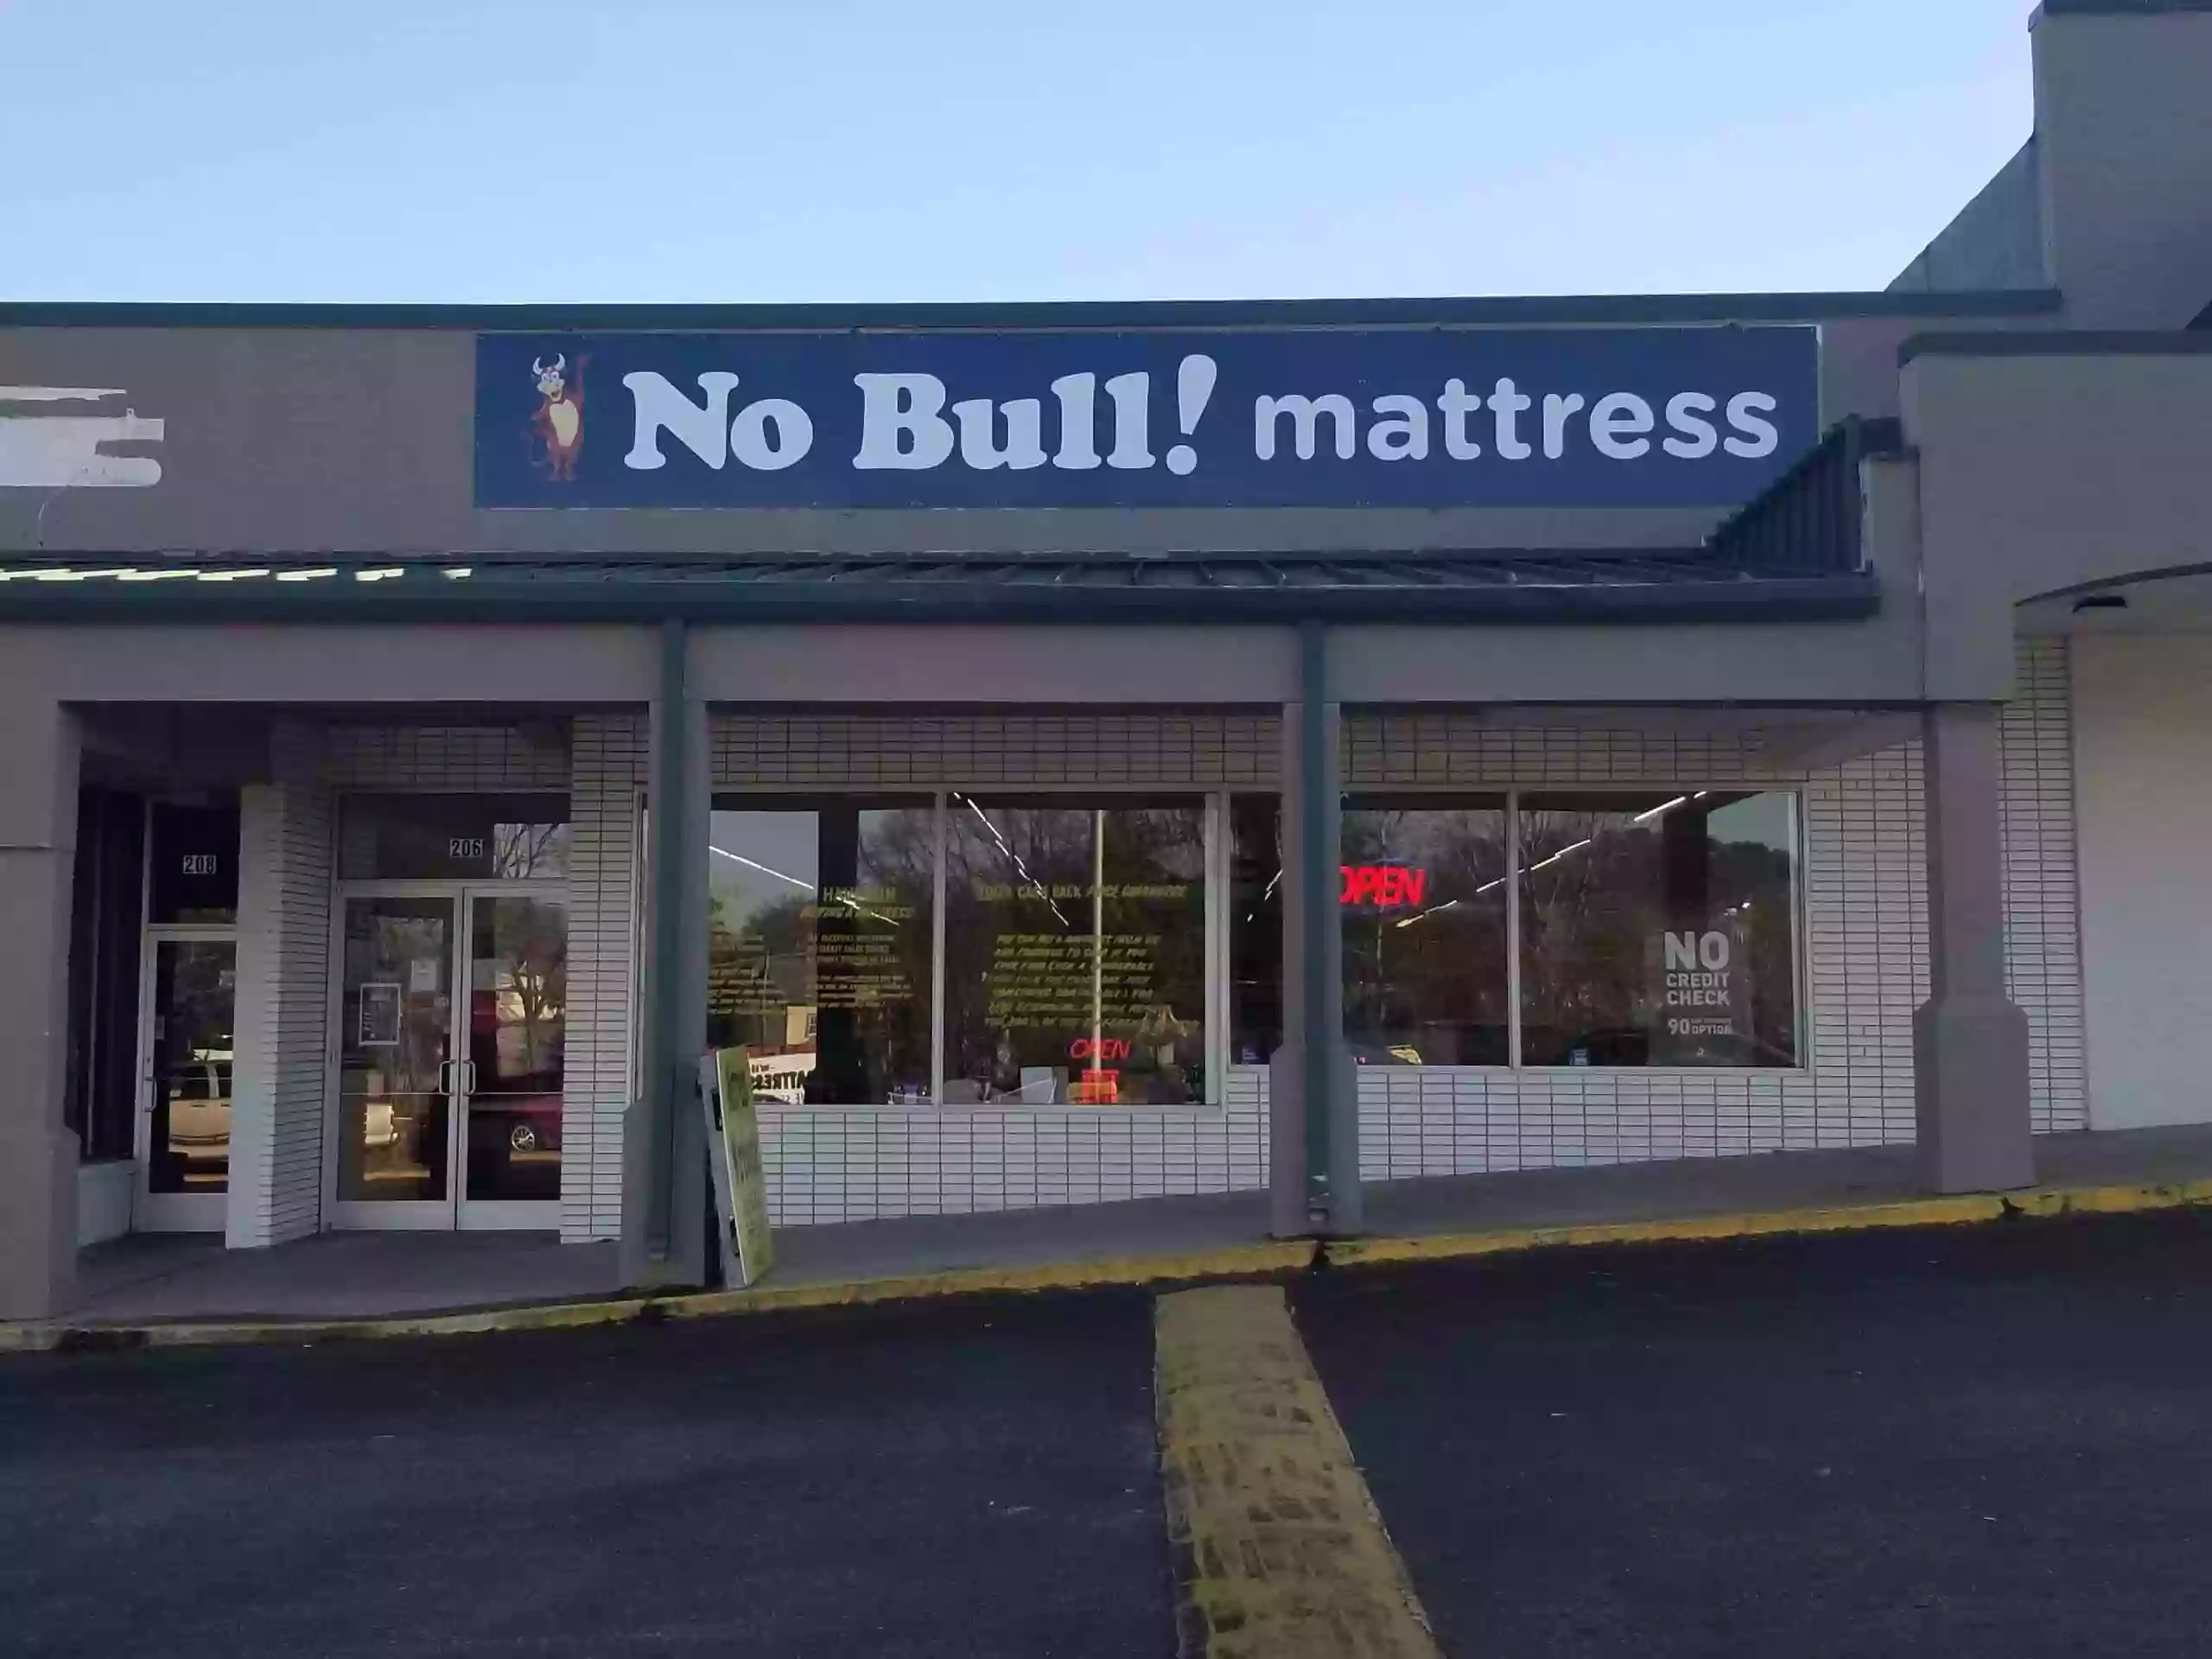 No Bull Mattress & More